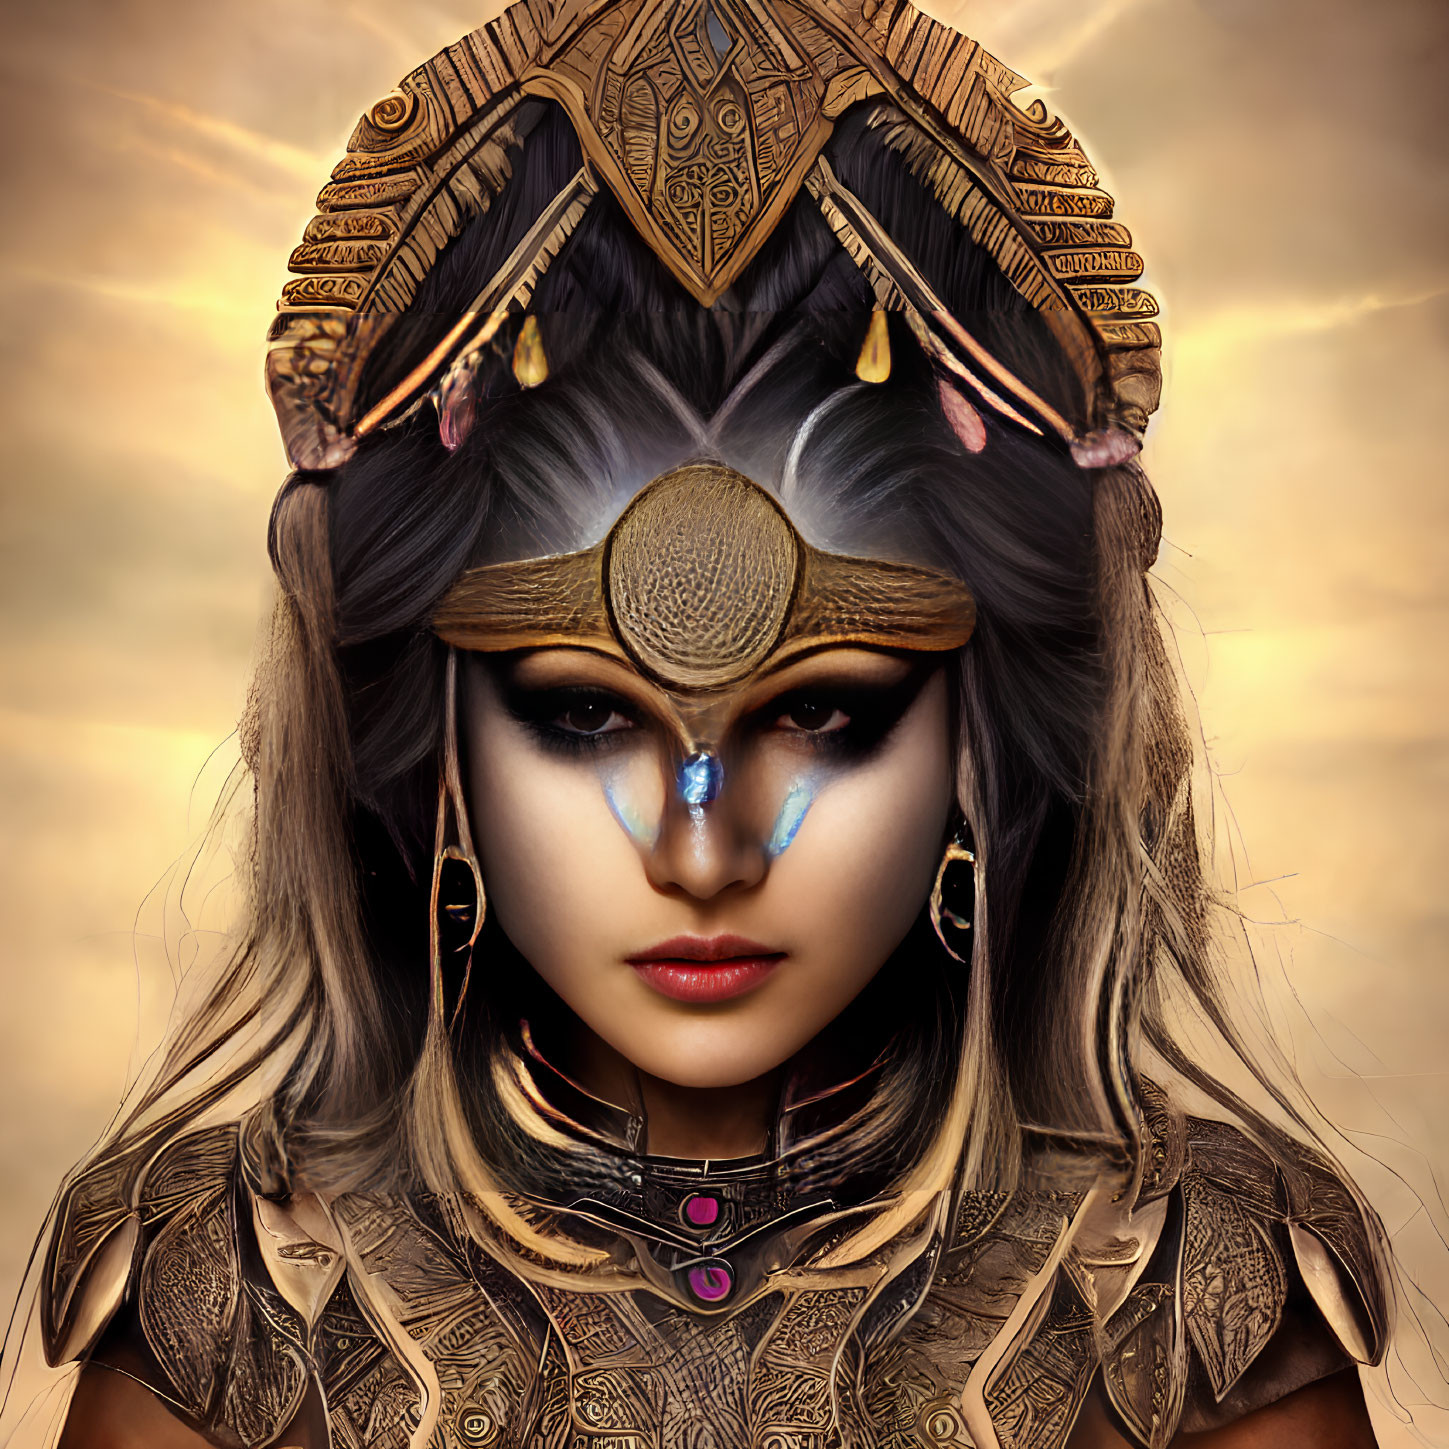 Digital art portrait of a woman with fantasy makeup, golden headdress, armor, under dramatic sky